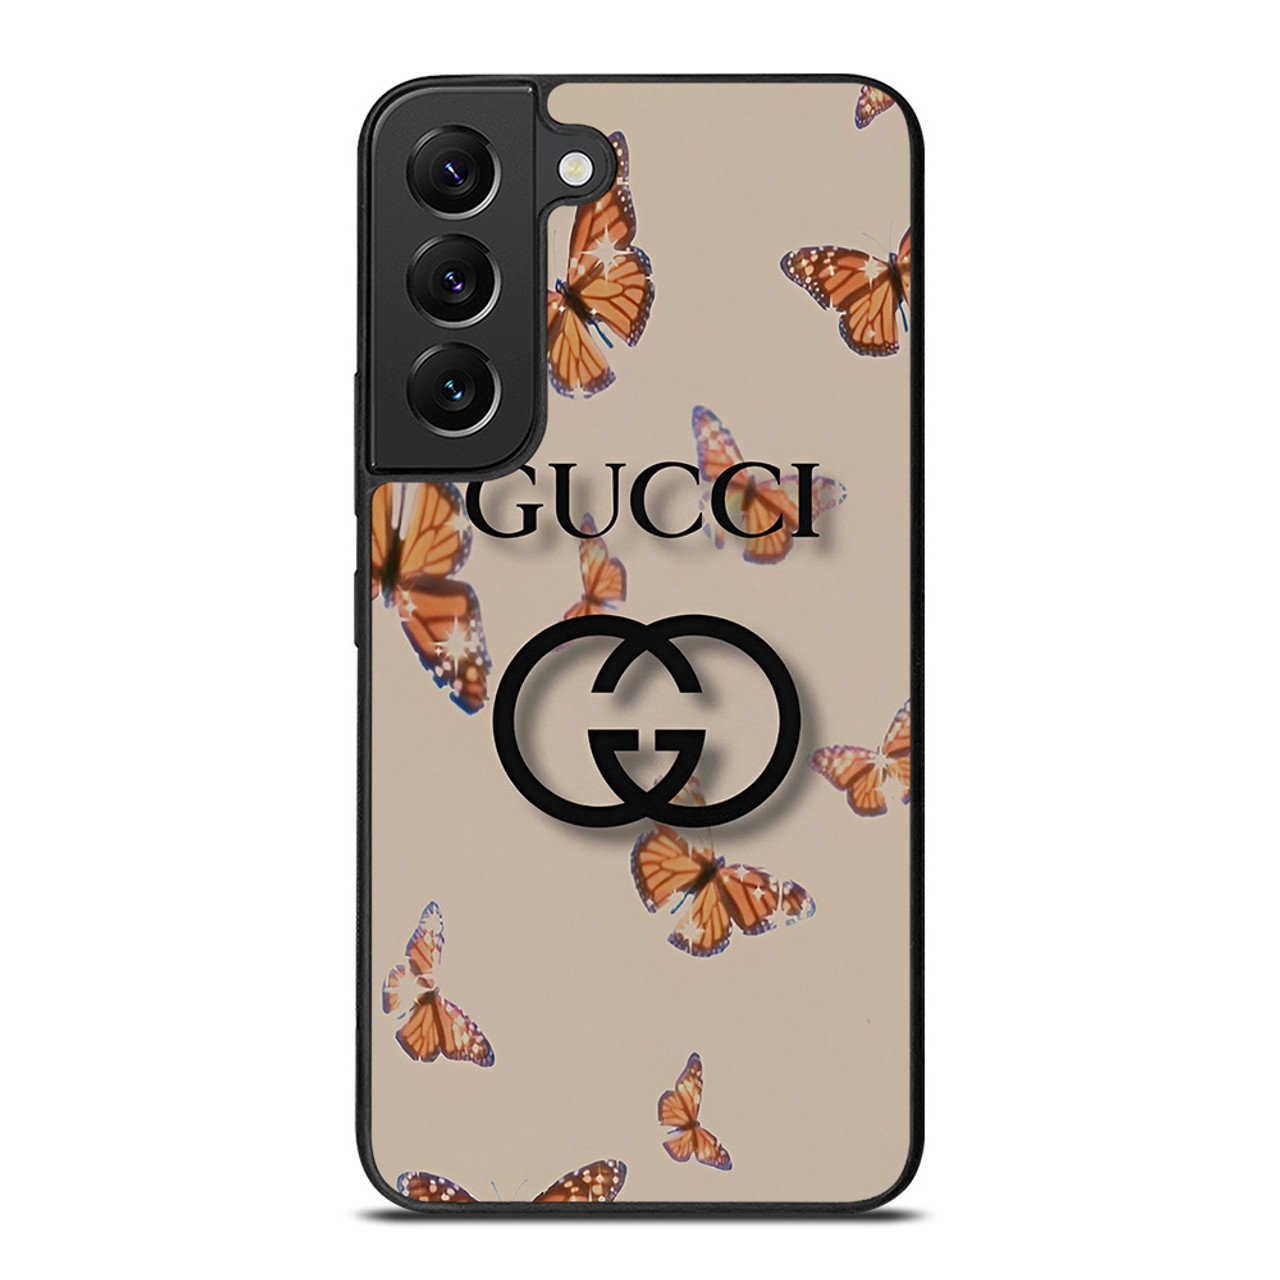 GUCCI LOGO BUTTERFLIES Galaxy Case Cover